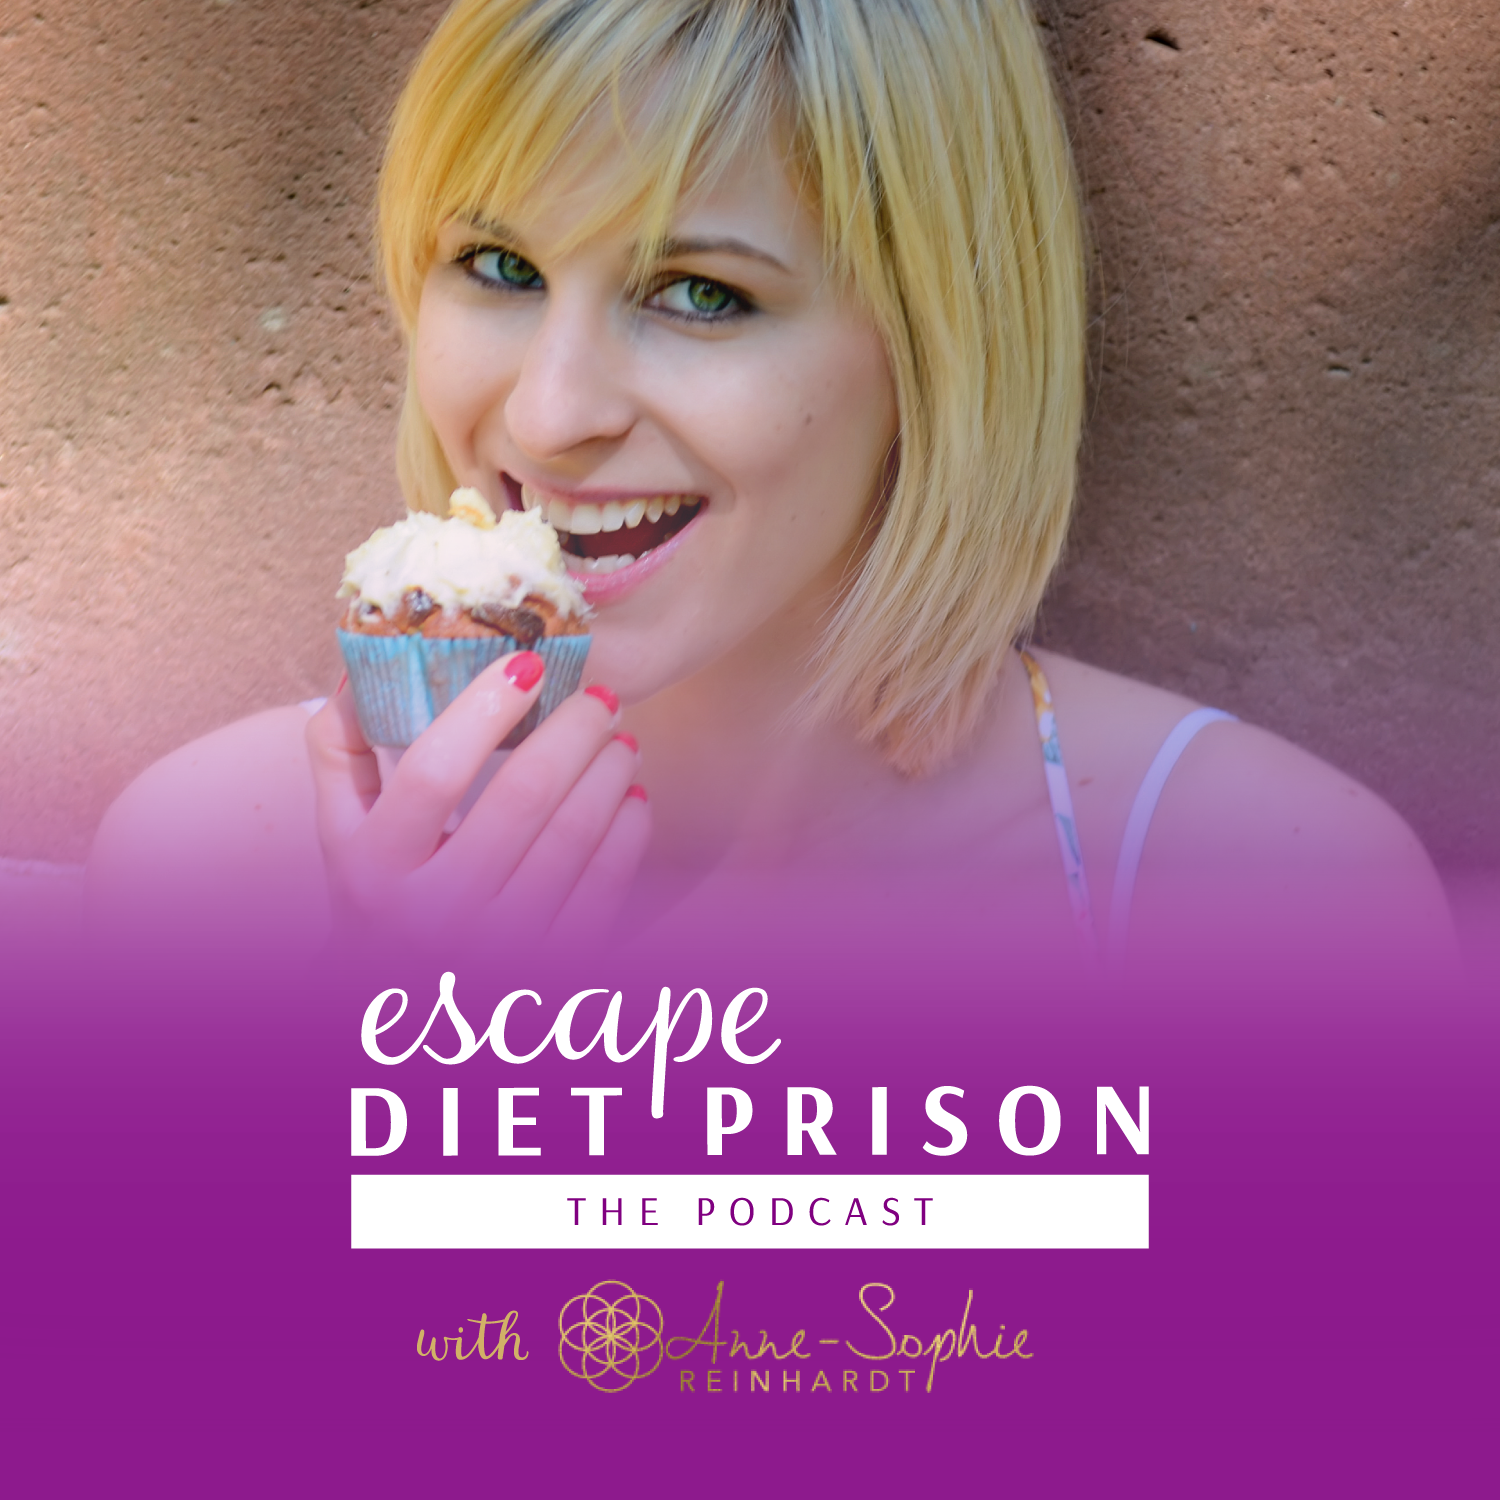 Escape Diet Prison - The Podcast with Anne-Sophie Reinhardt artwork